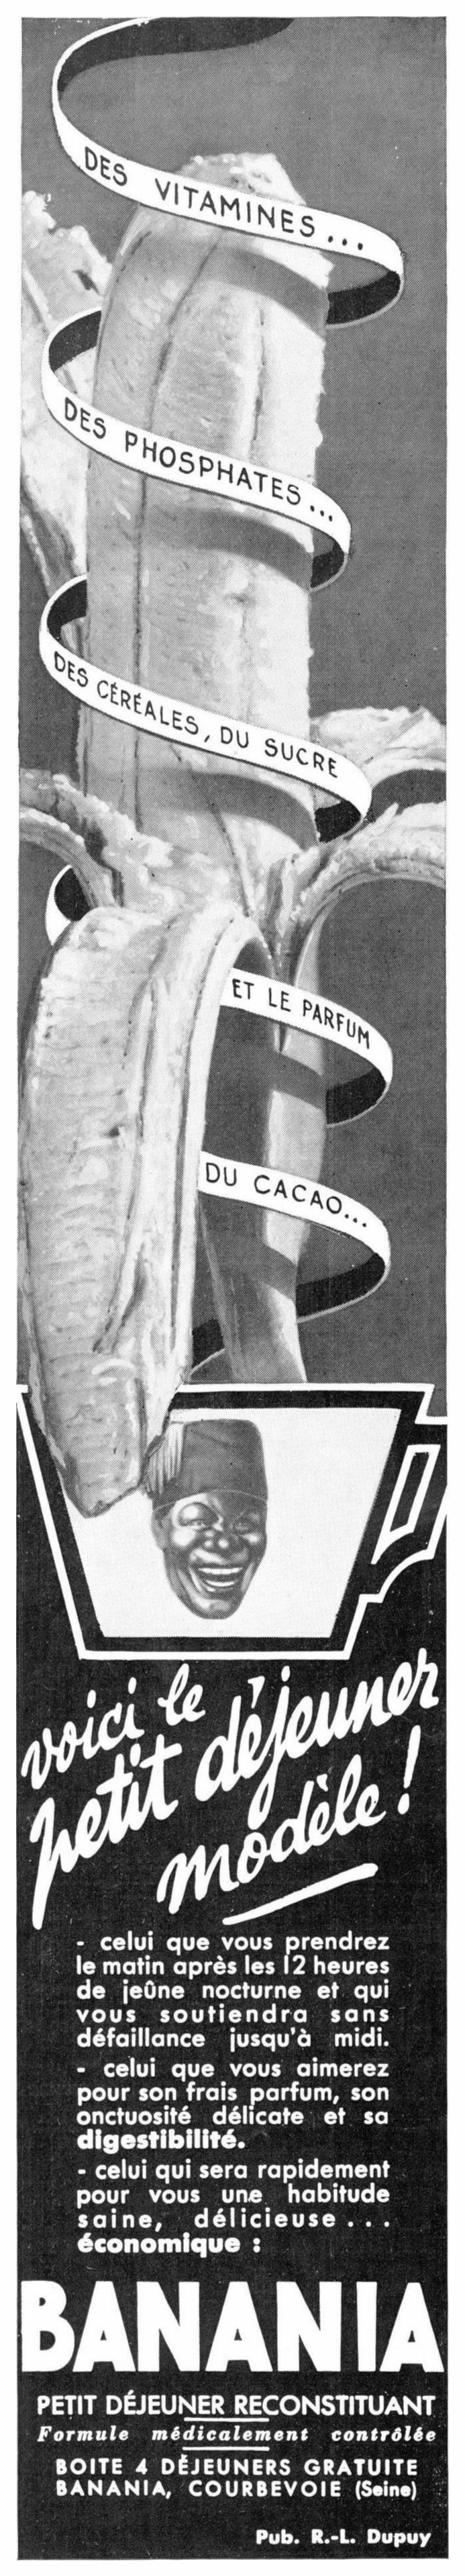 Banania 1939 0.jpg